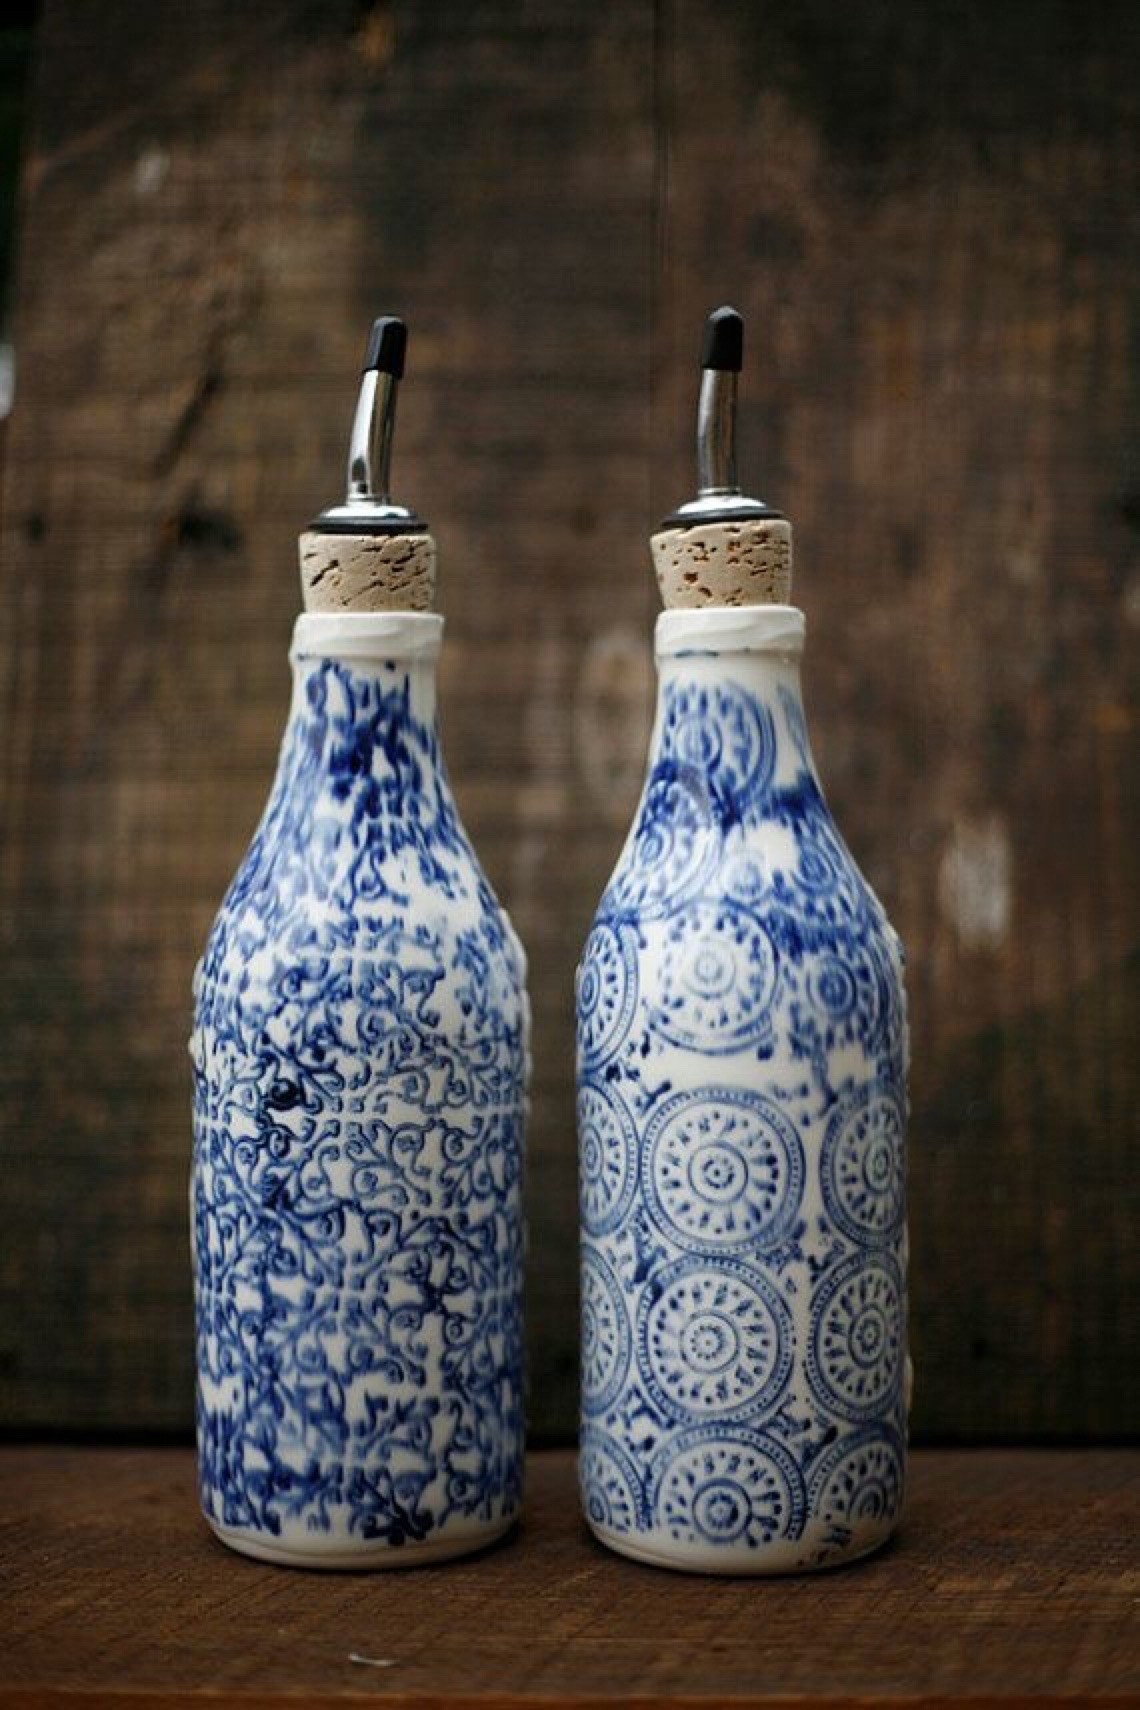 Decorative oil and vinegar bottles